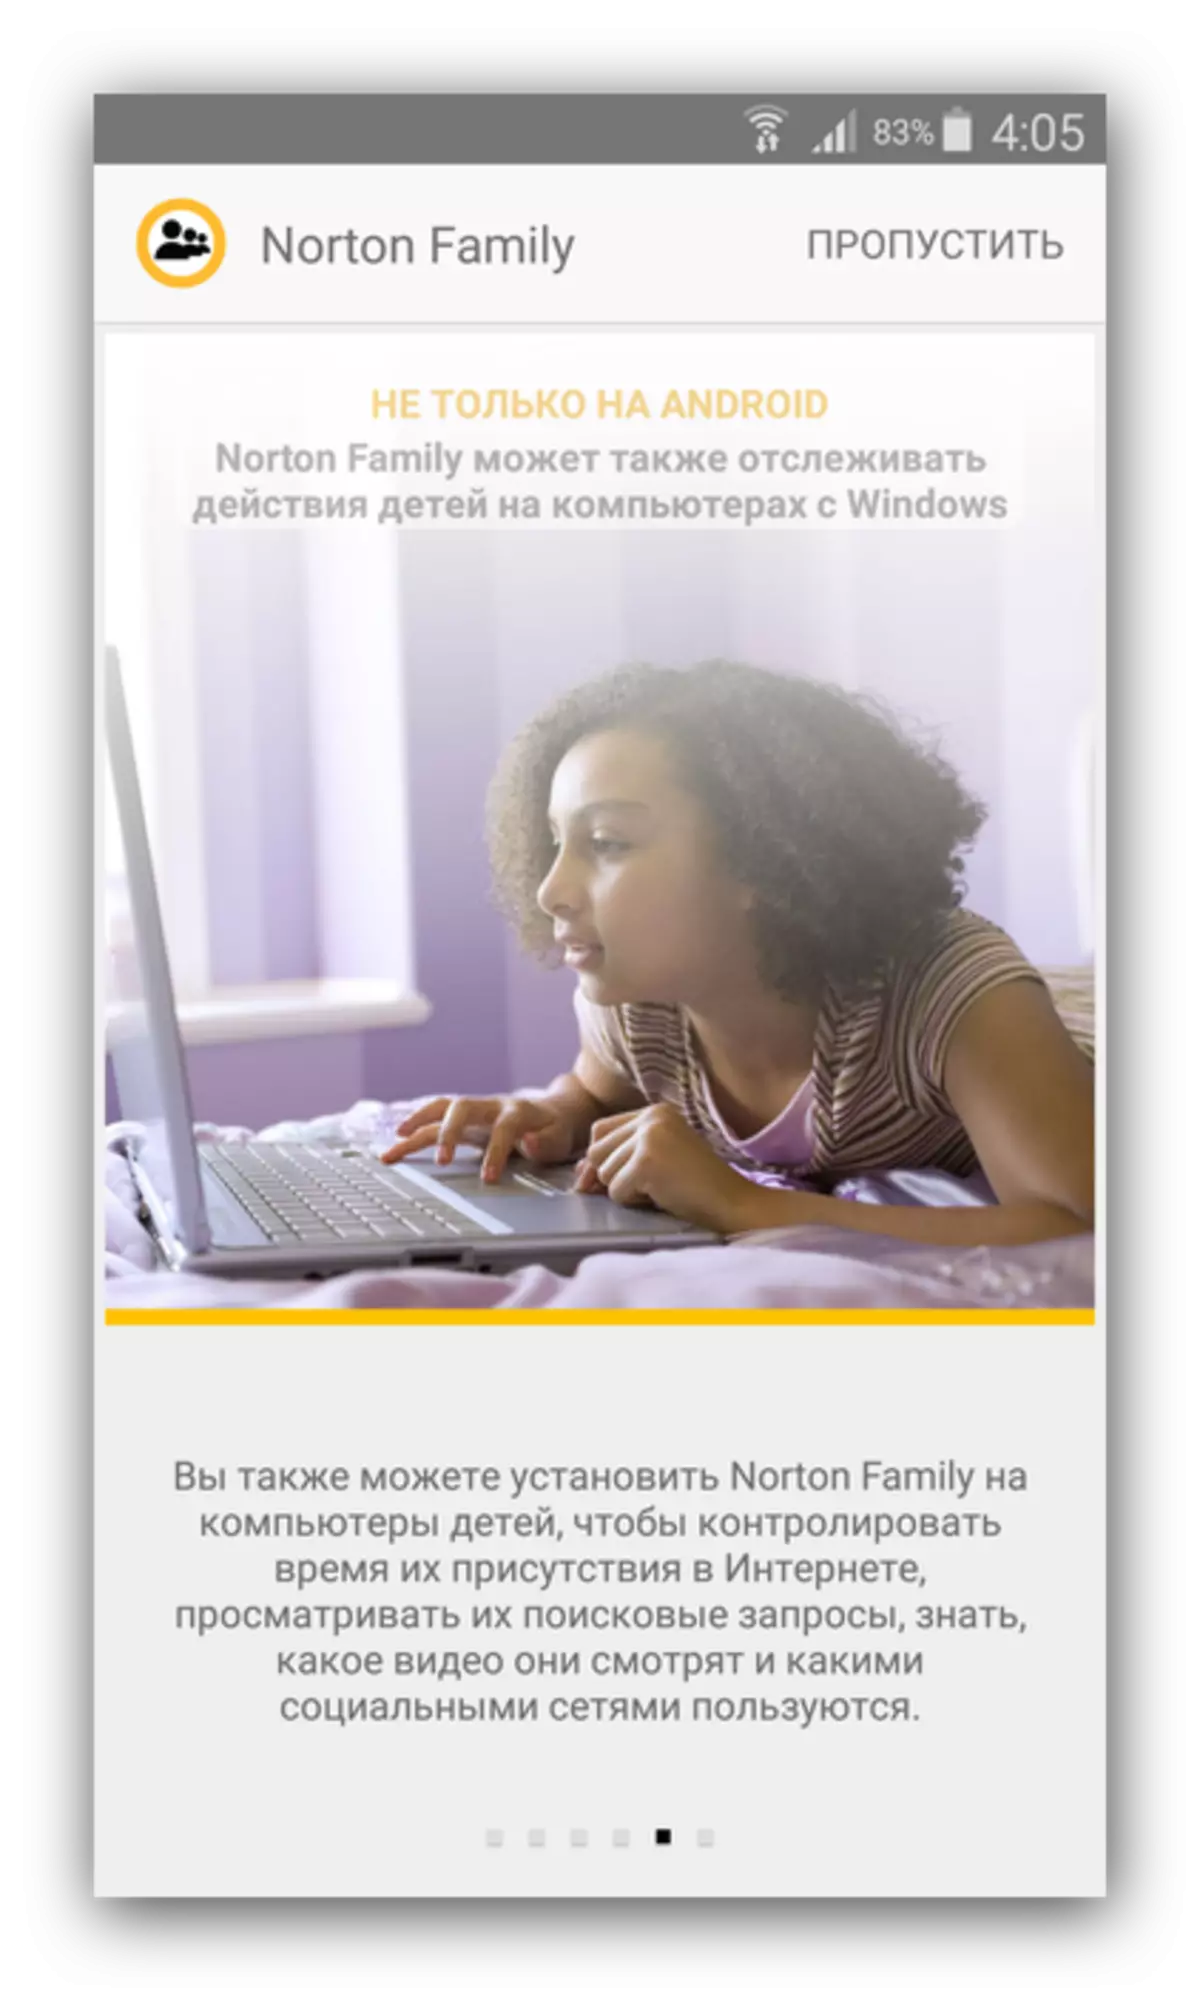 Norton Family Gurasoen Kontrol aplikazioa